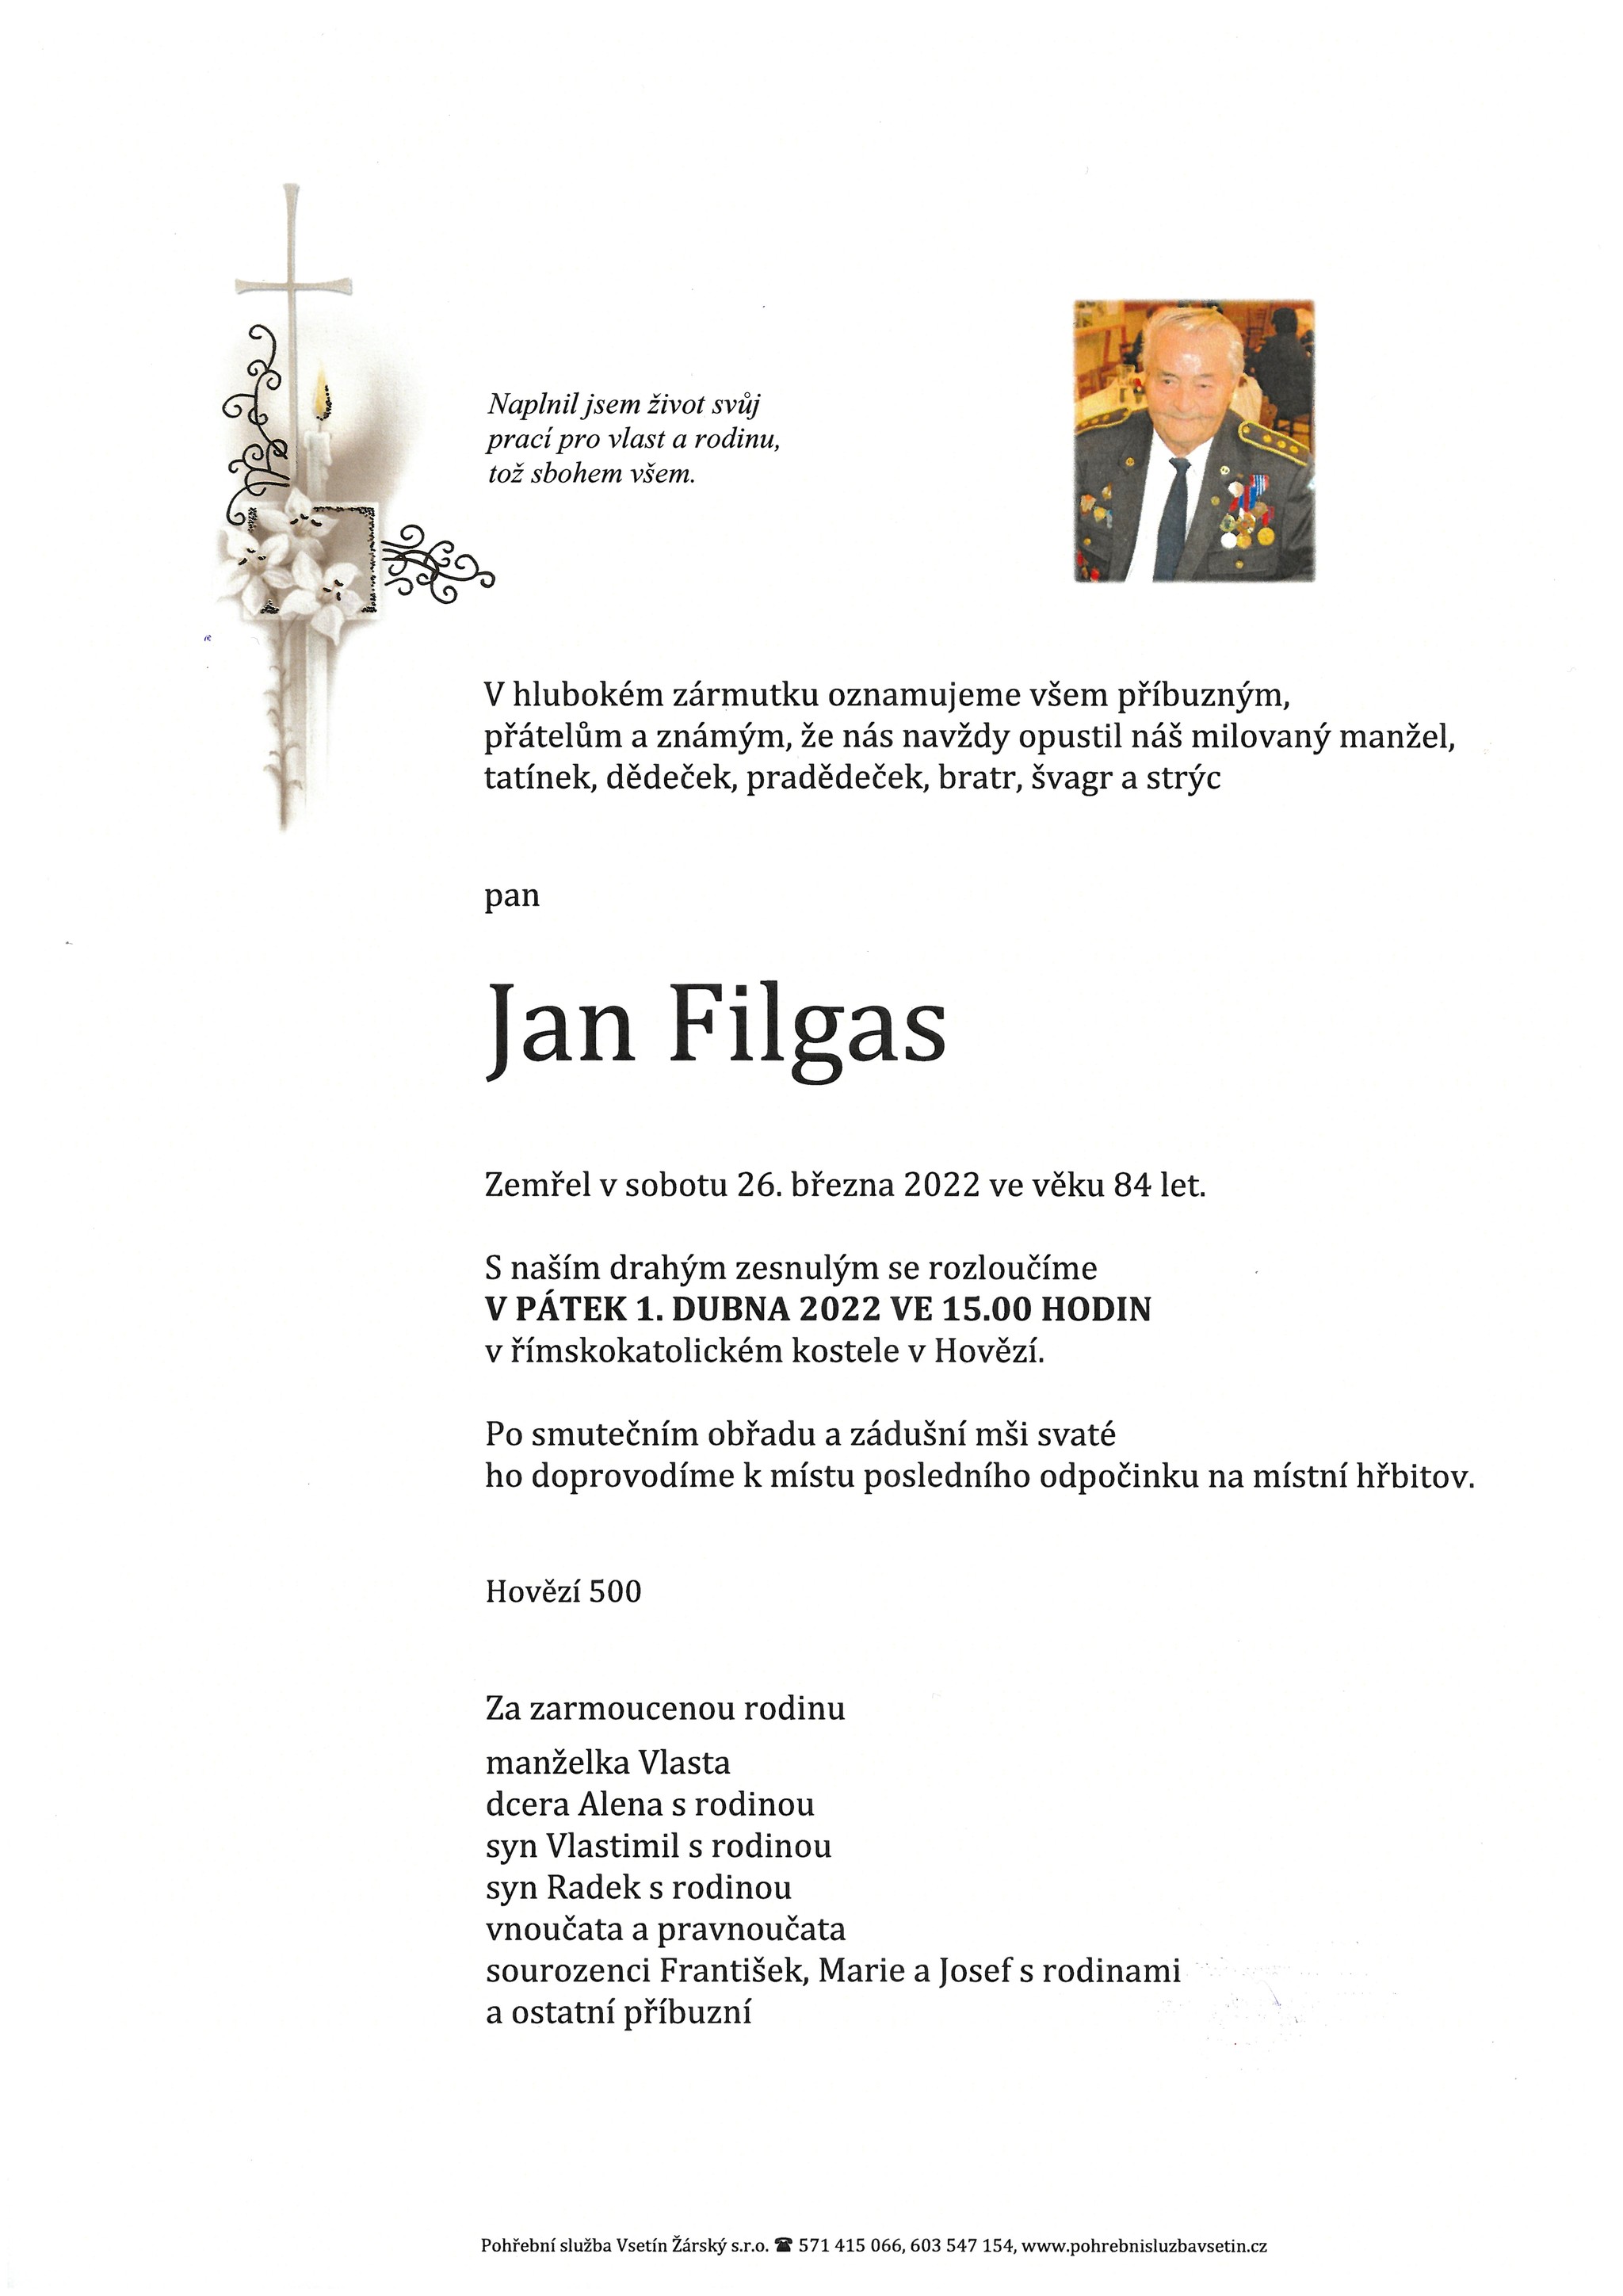 Jan Filgas